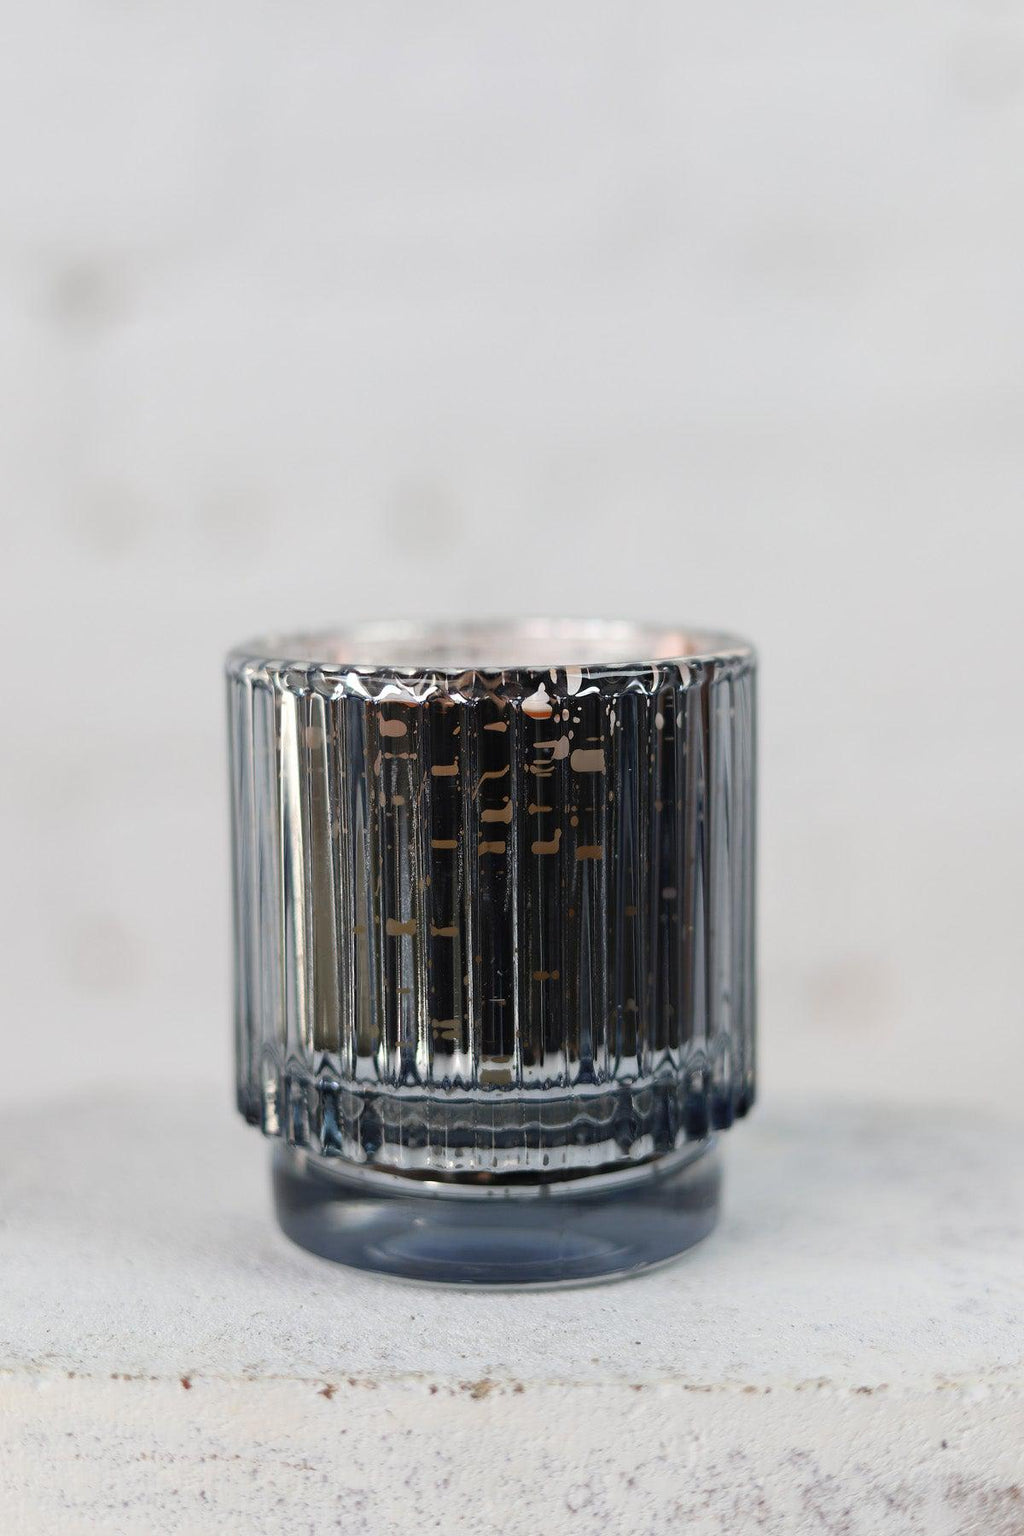 Cypress Fir 4.5 oz Silver Mercury Glass Candle